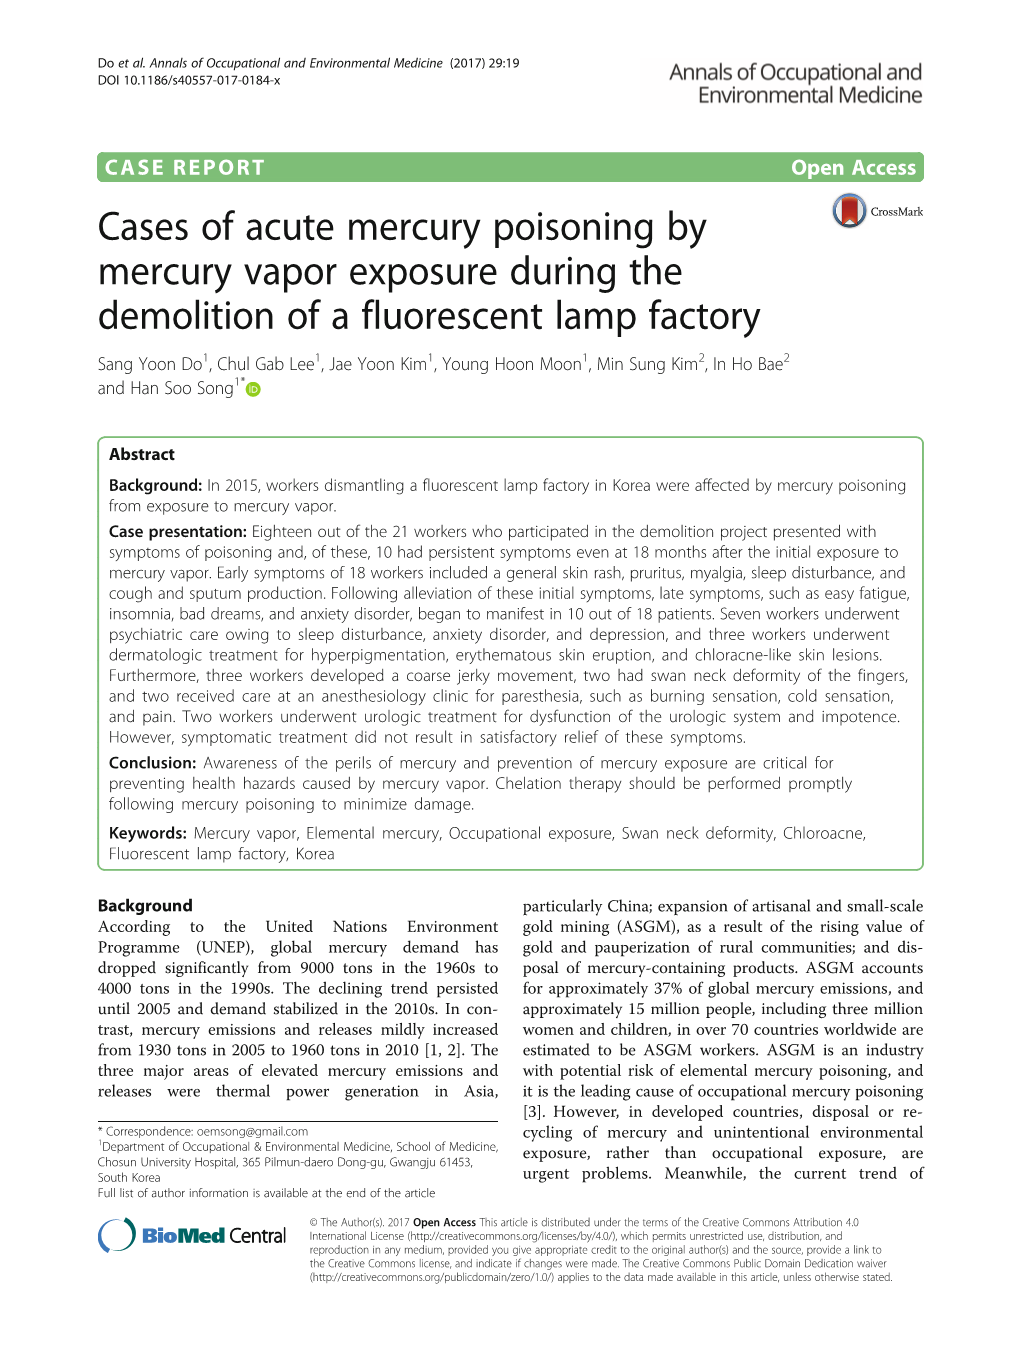 Cases of Acute Mercury Poisoning by Mercury Vapor Exposure During The